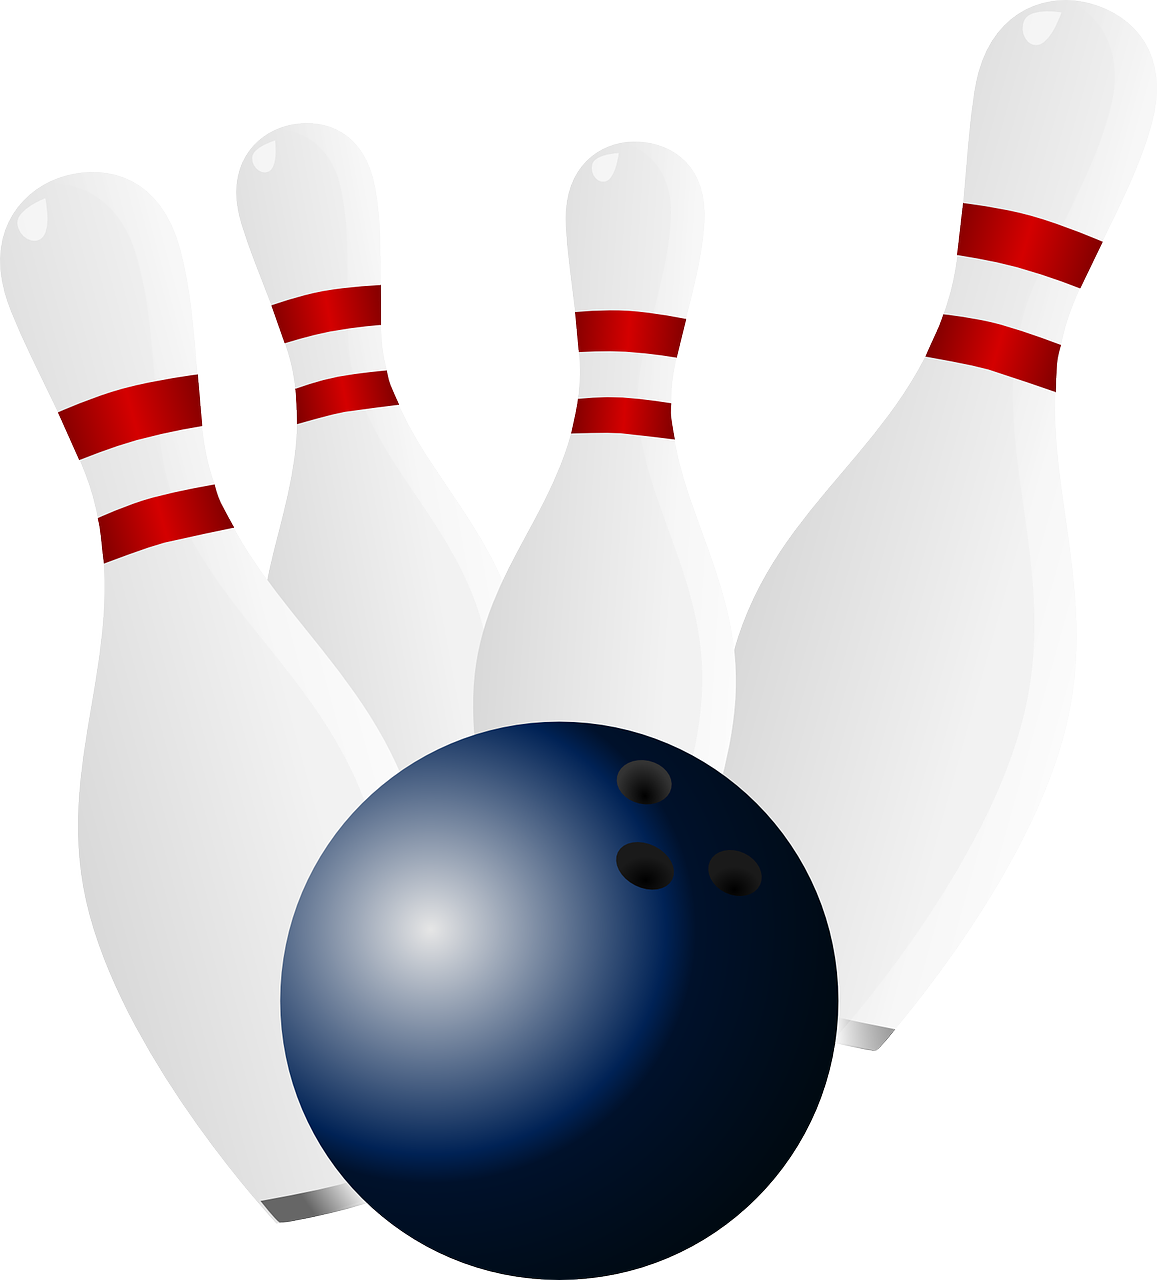 https://pixabay.com/pl/vectors/kr%c4%99gle-szpilki-sport-hazard-157933/